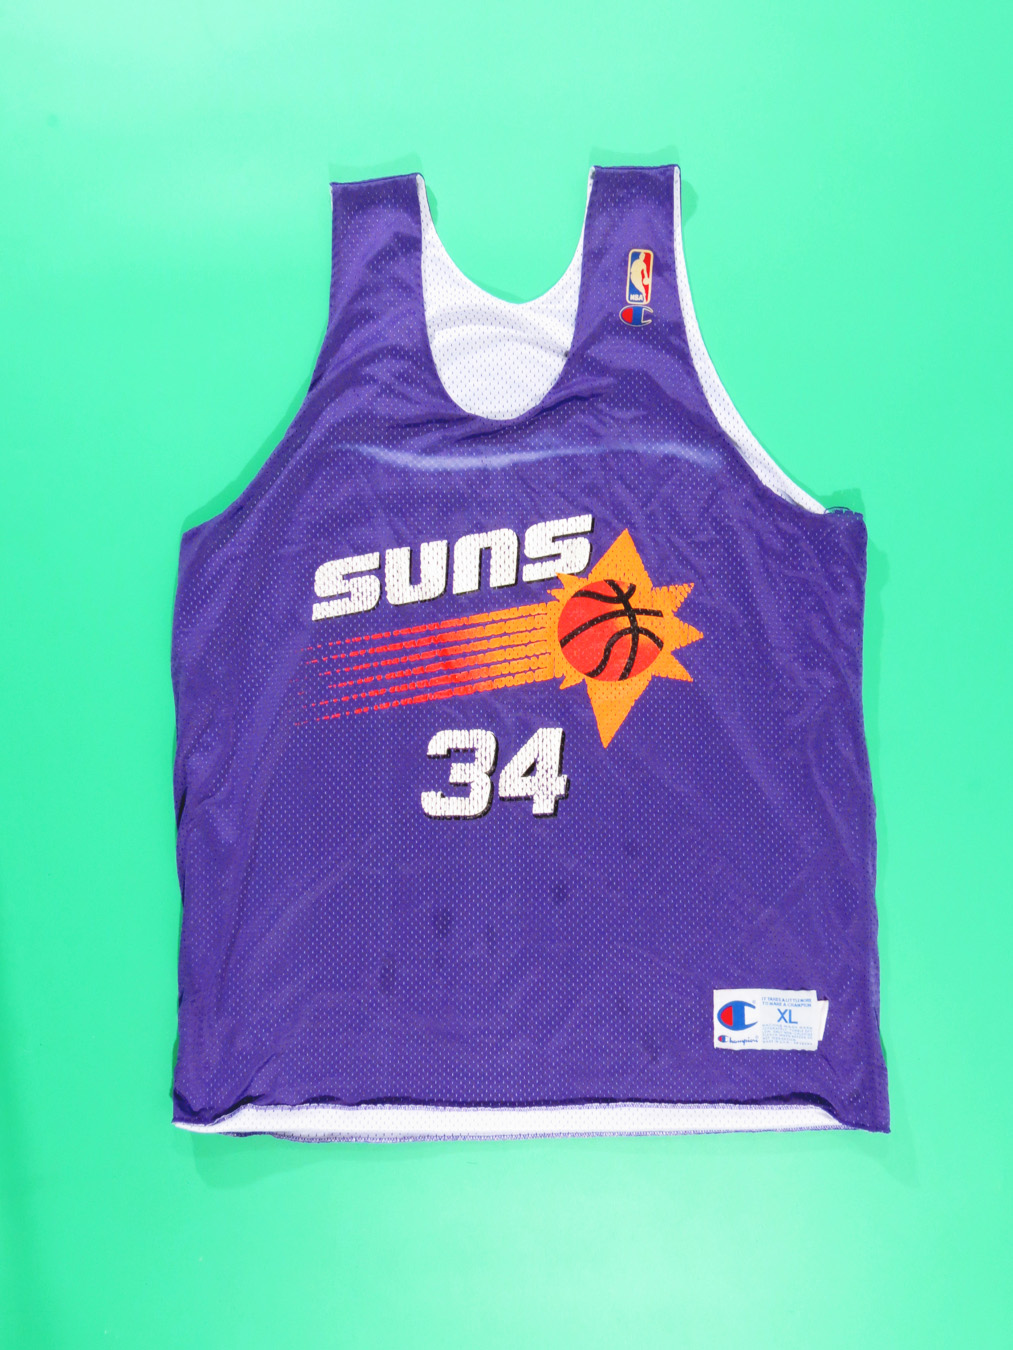 Phoenix Suns Vintage Champion Practice Jersey #15 - Team Issue? - Large